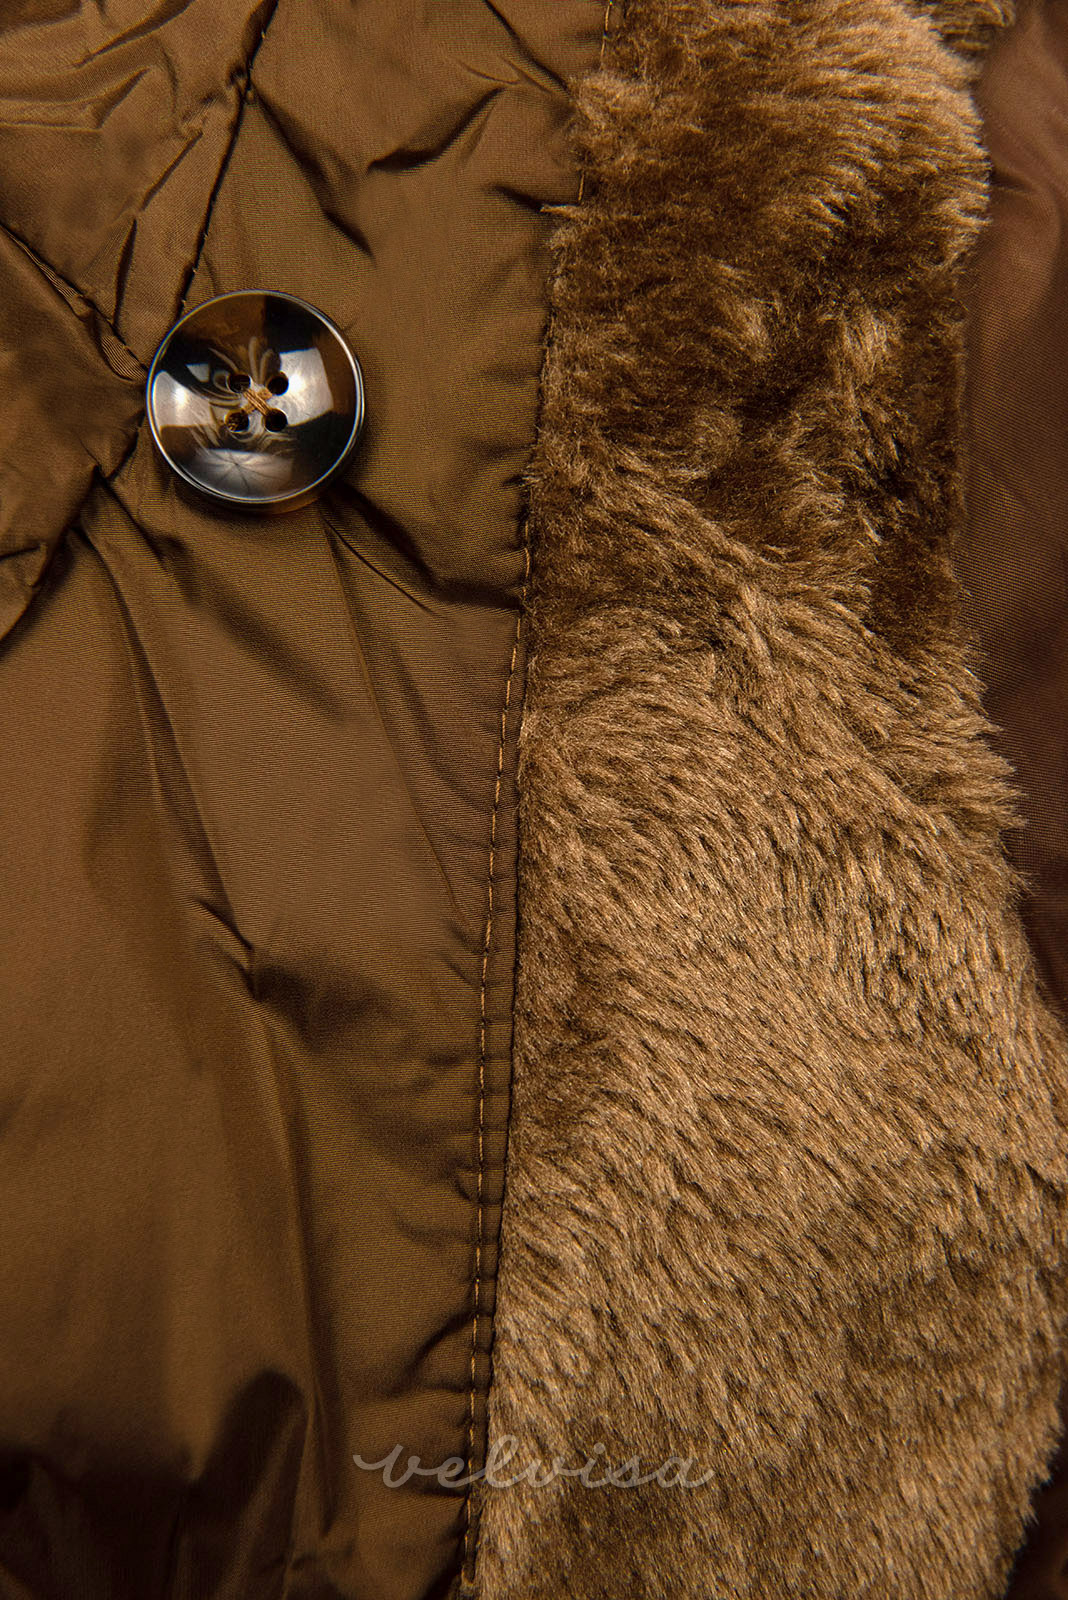 Karamelnorjava prešita zimska jakna z visokim ovratnikom